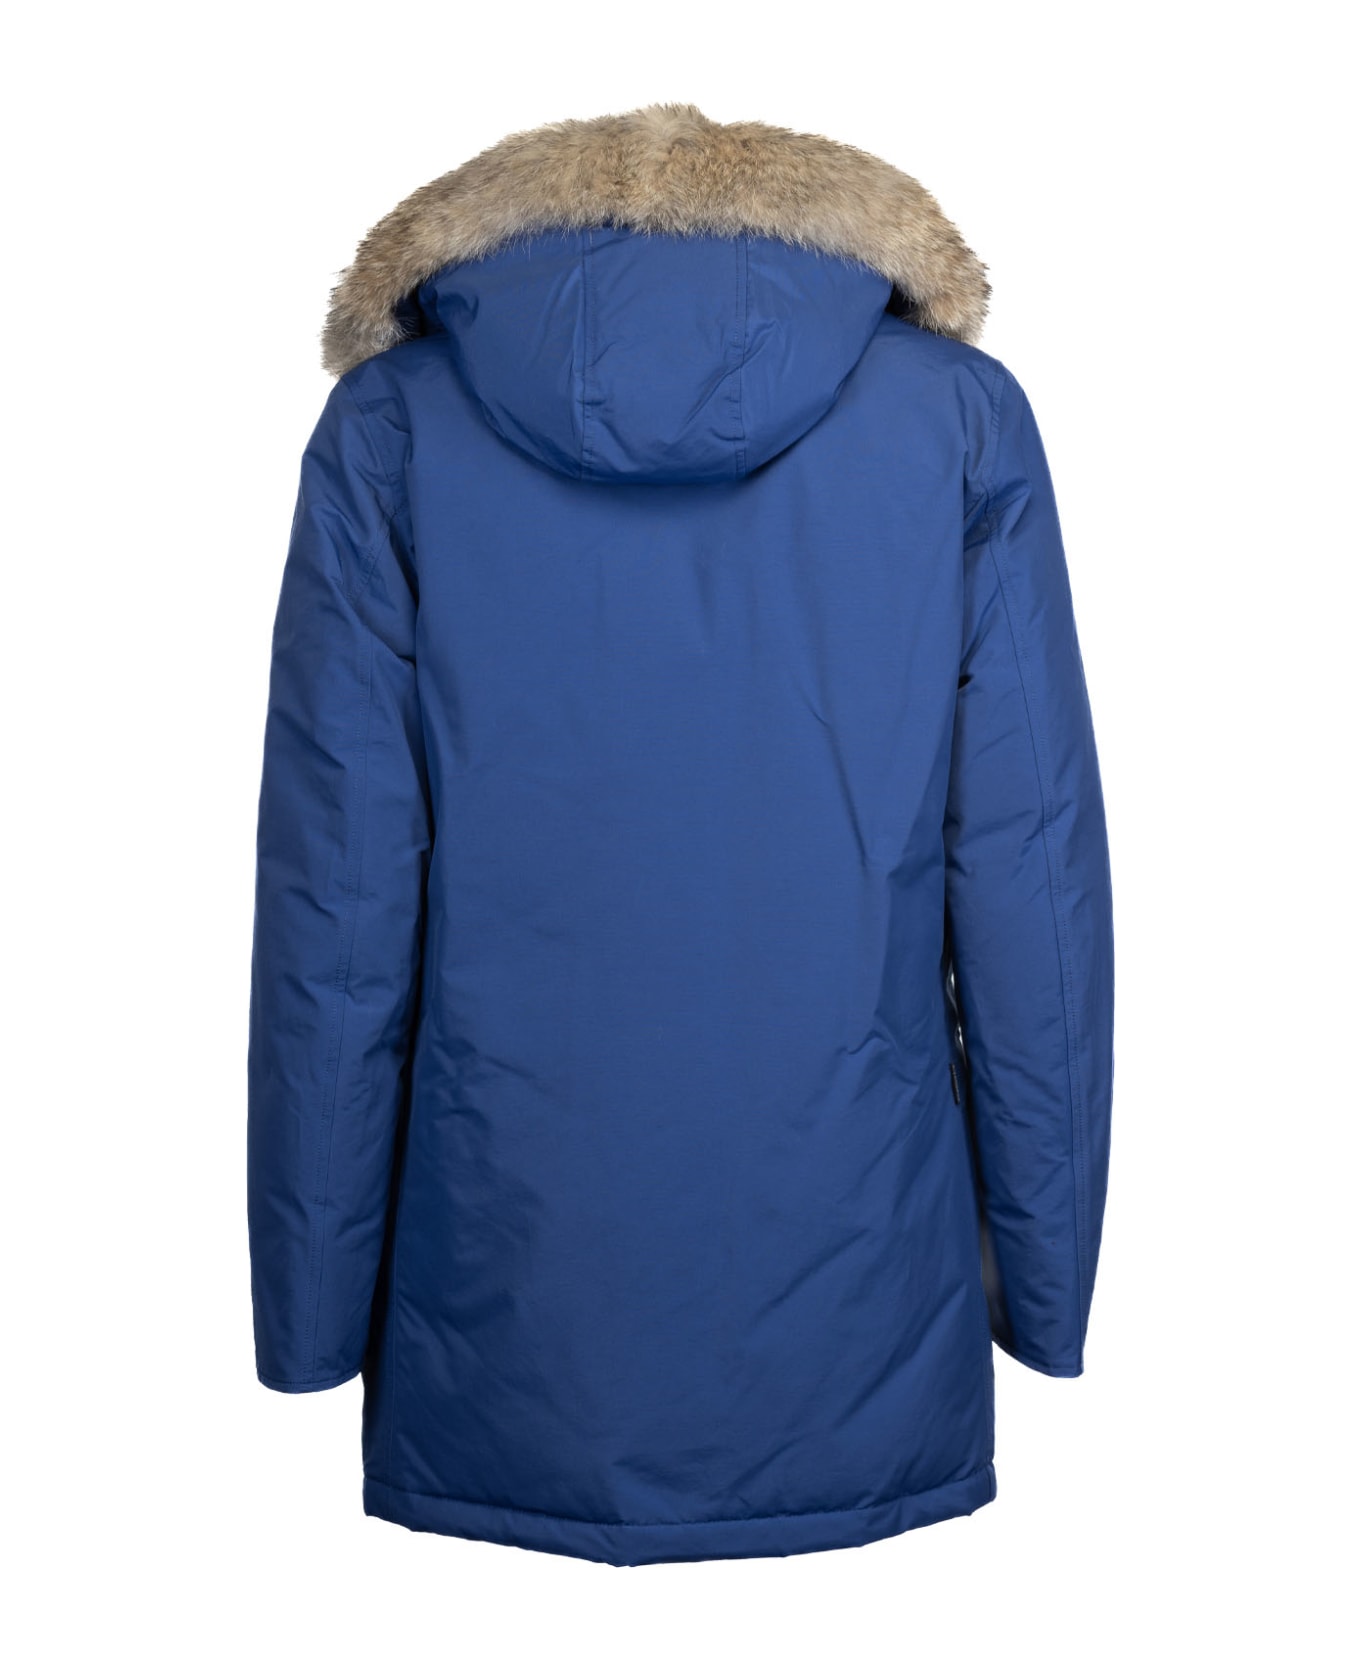 Woolrich Arctic Detachable Fur Parka - Blu Chiaro コート